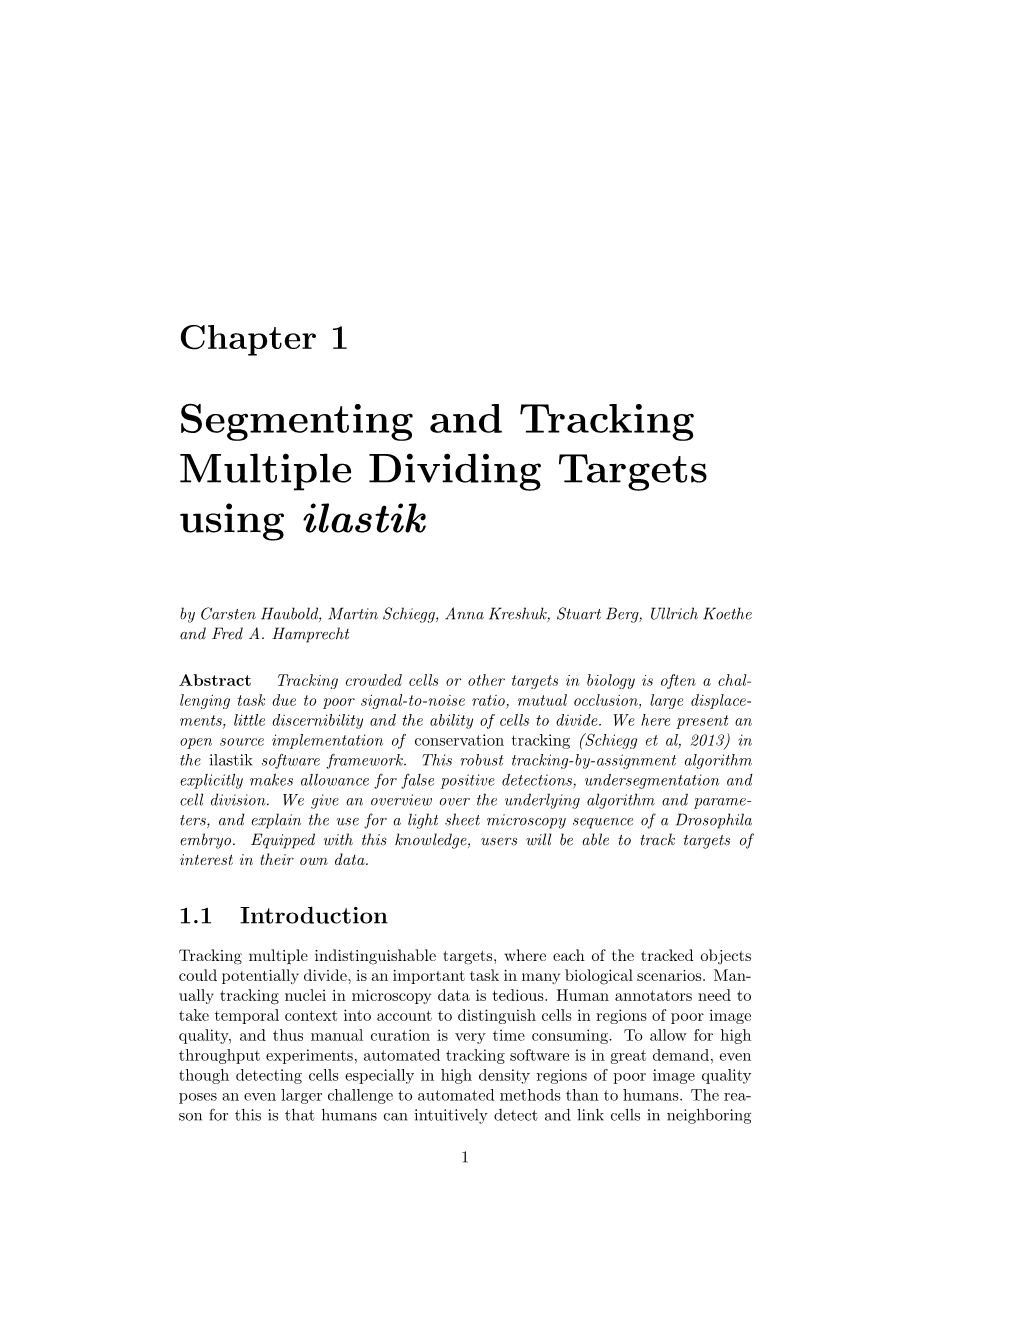 Segmenting and Tracking Multiple Dividing Targets Using Ilastik